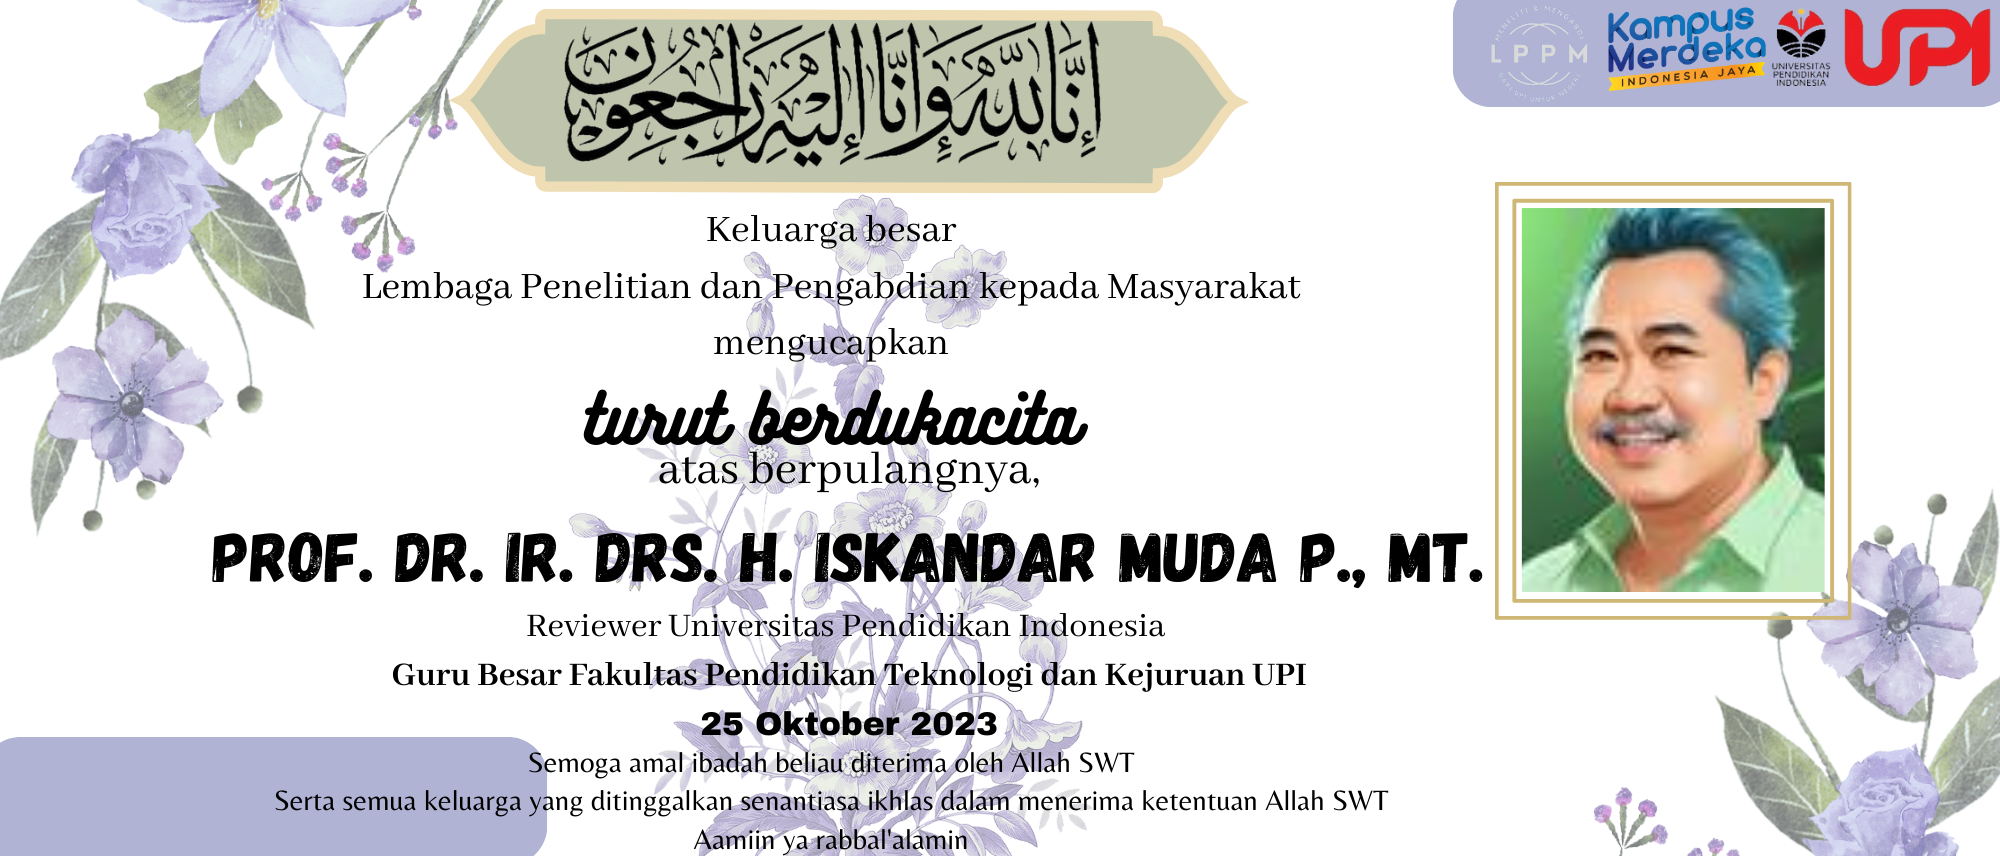 Berita duka Prof. Dr. Ir. Drs. H. Iskandar Muda Purwaamijaya, MT.